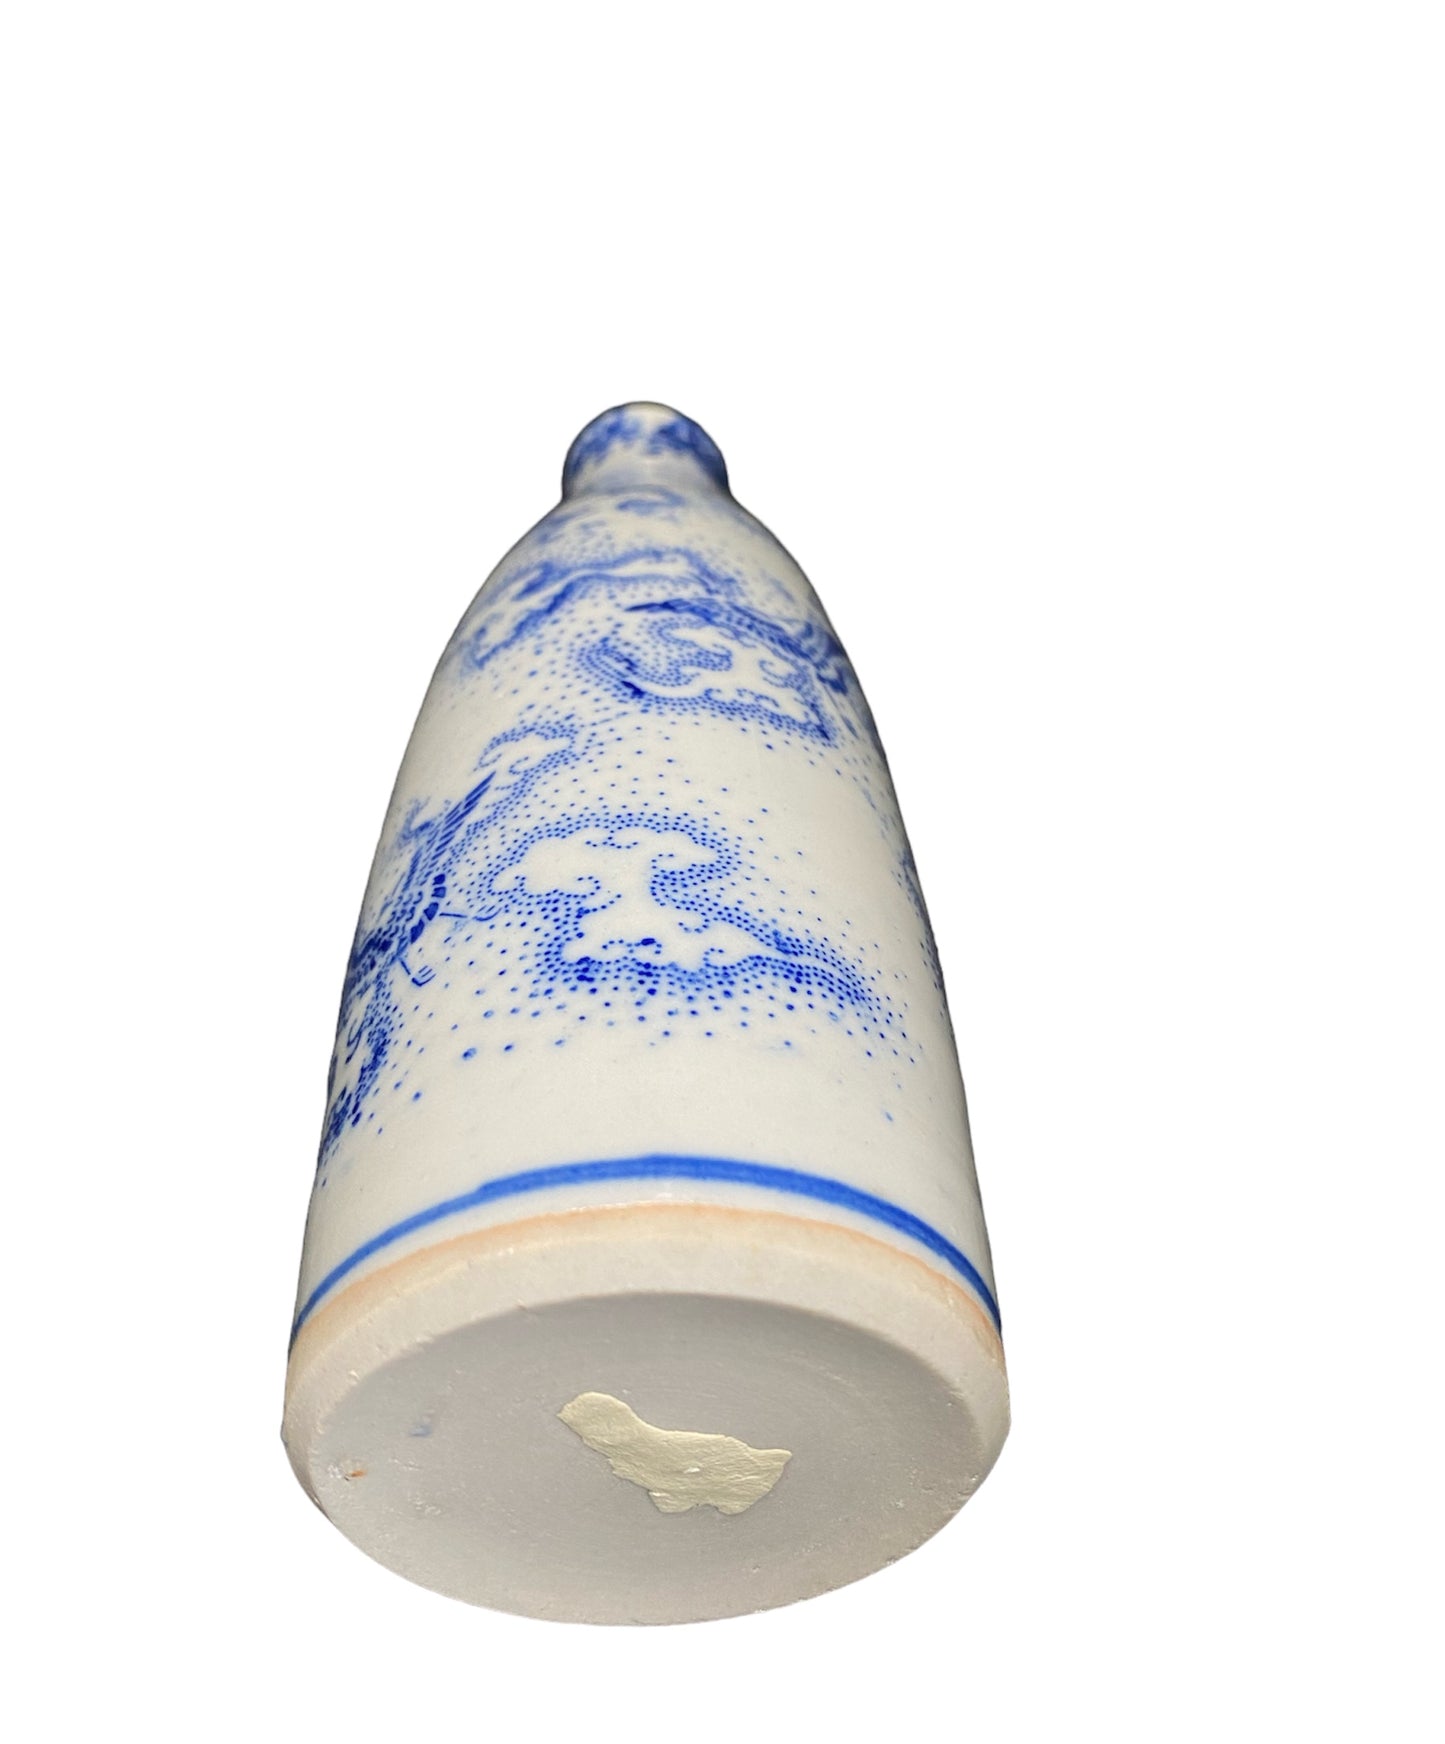 Large sake bottle with crane-patterned seal stamp　